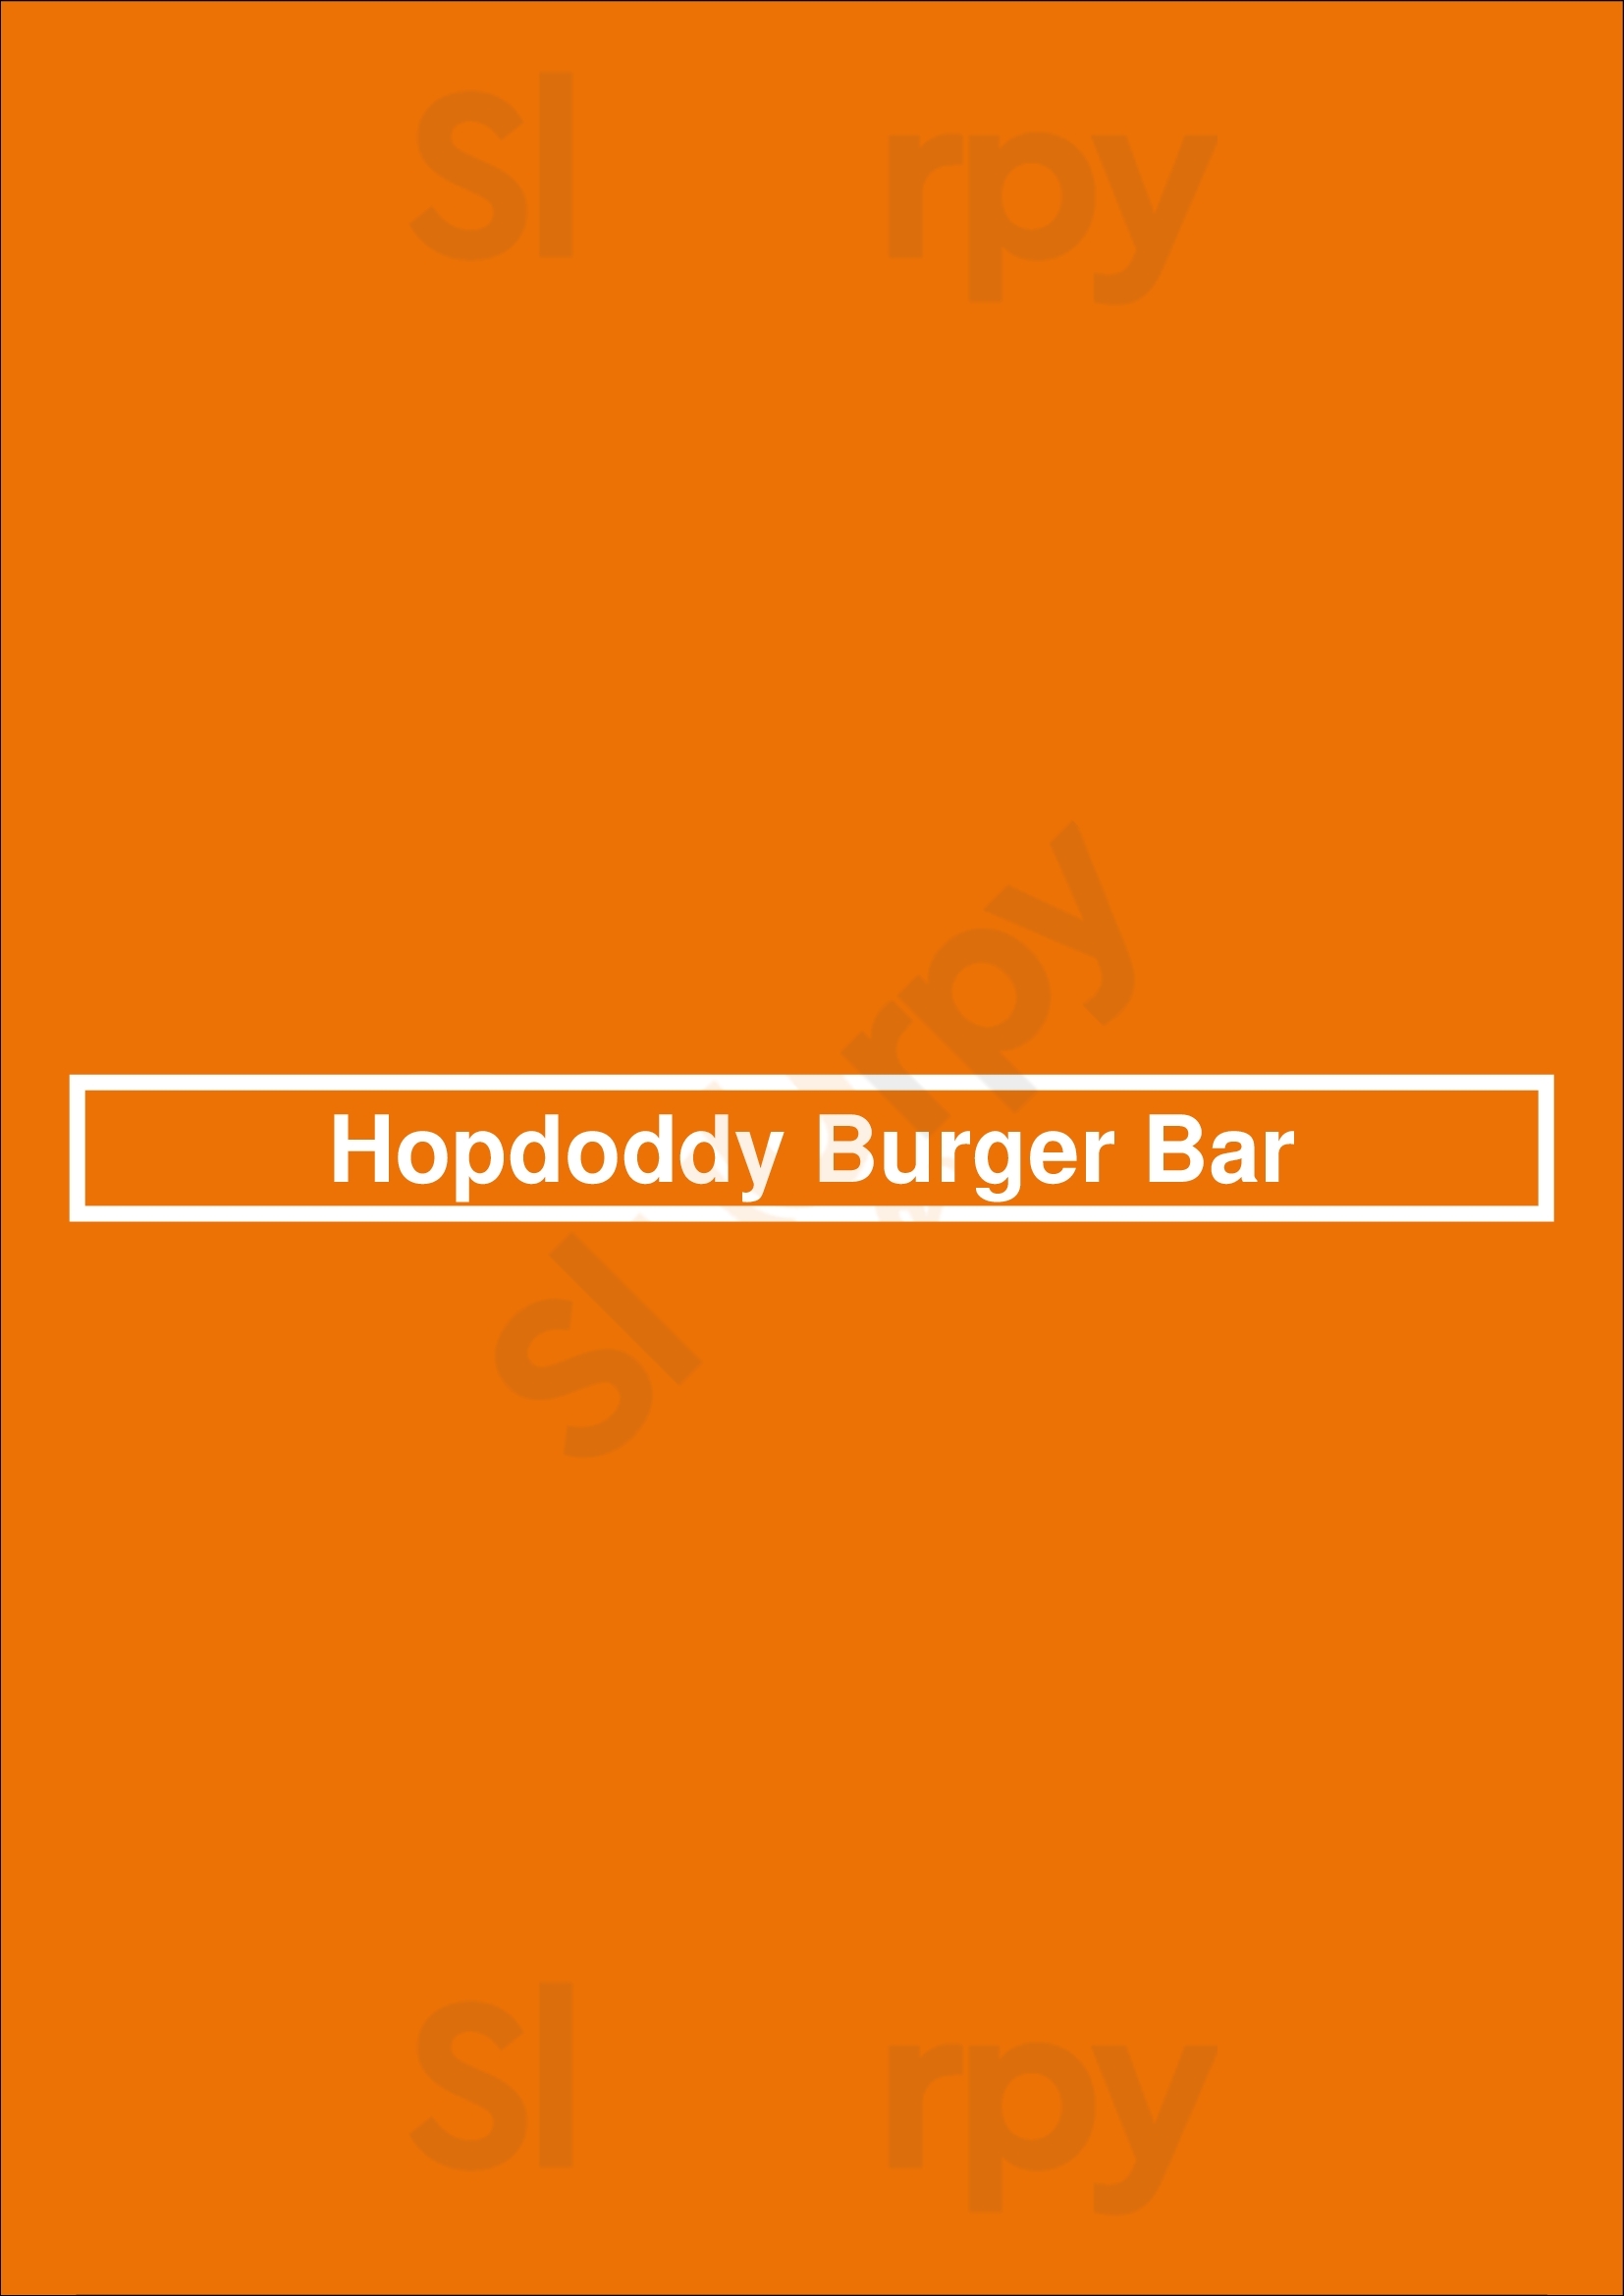 Hopdoddy Burger Bar Dallas Menu - 1